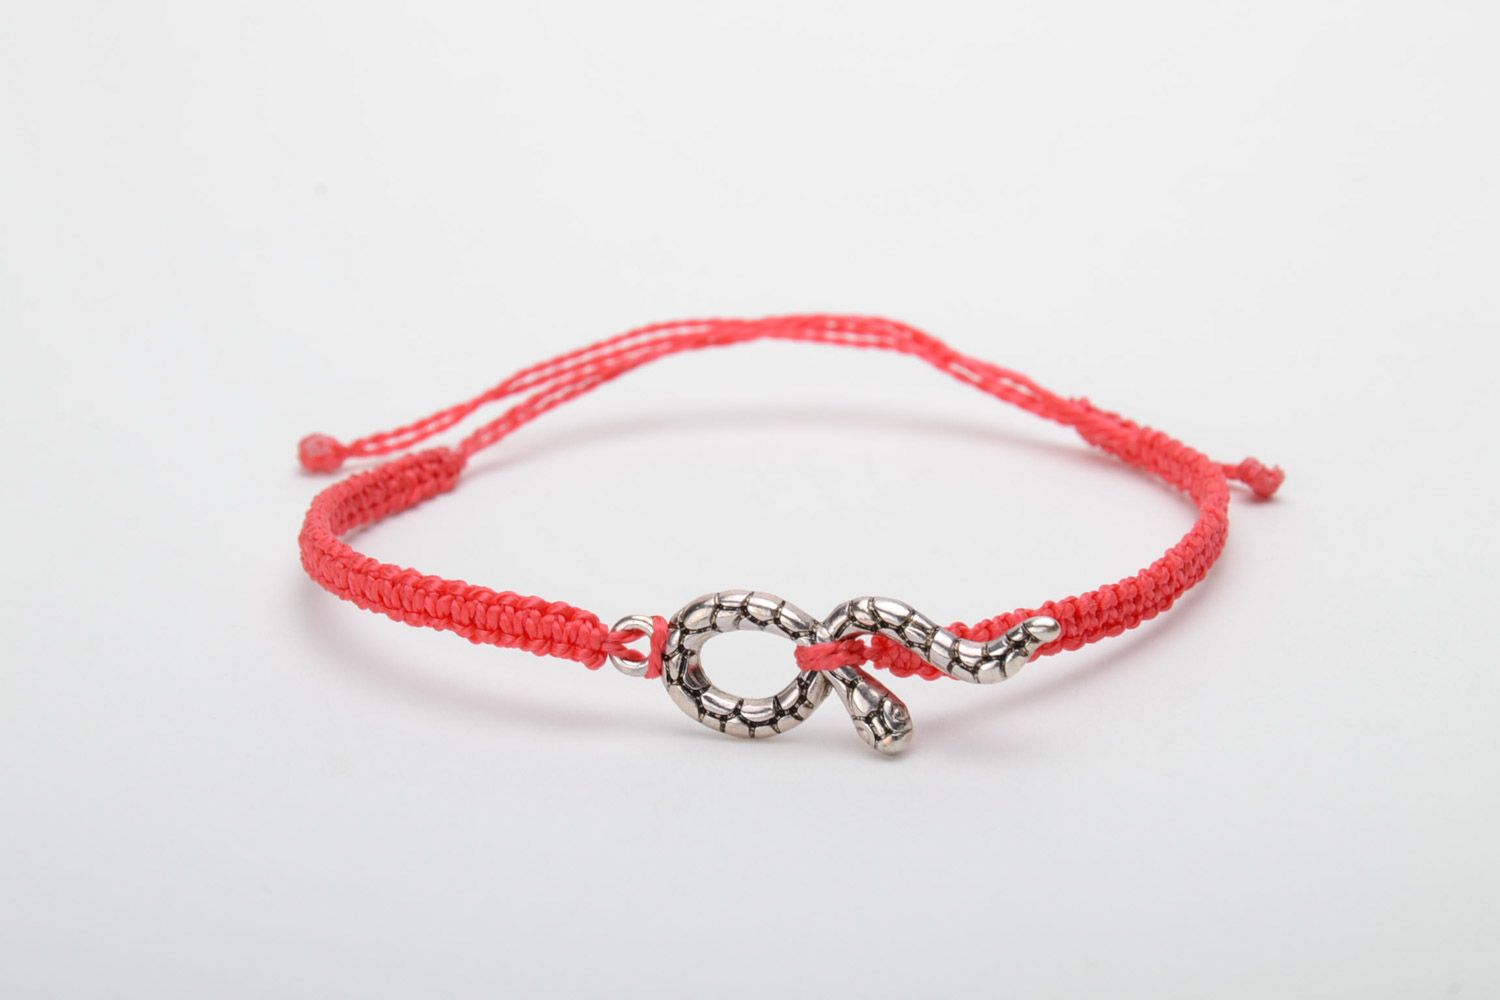 Handmade designer women's macrame bracelet of red color with metal snake charm photo 5